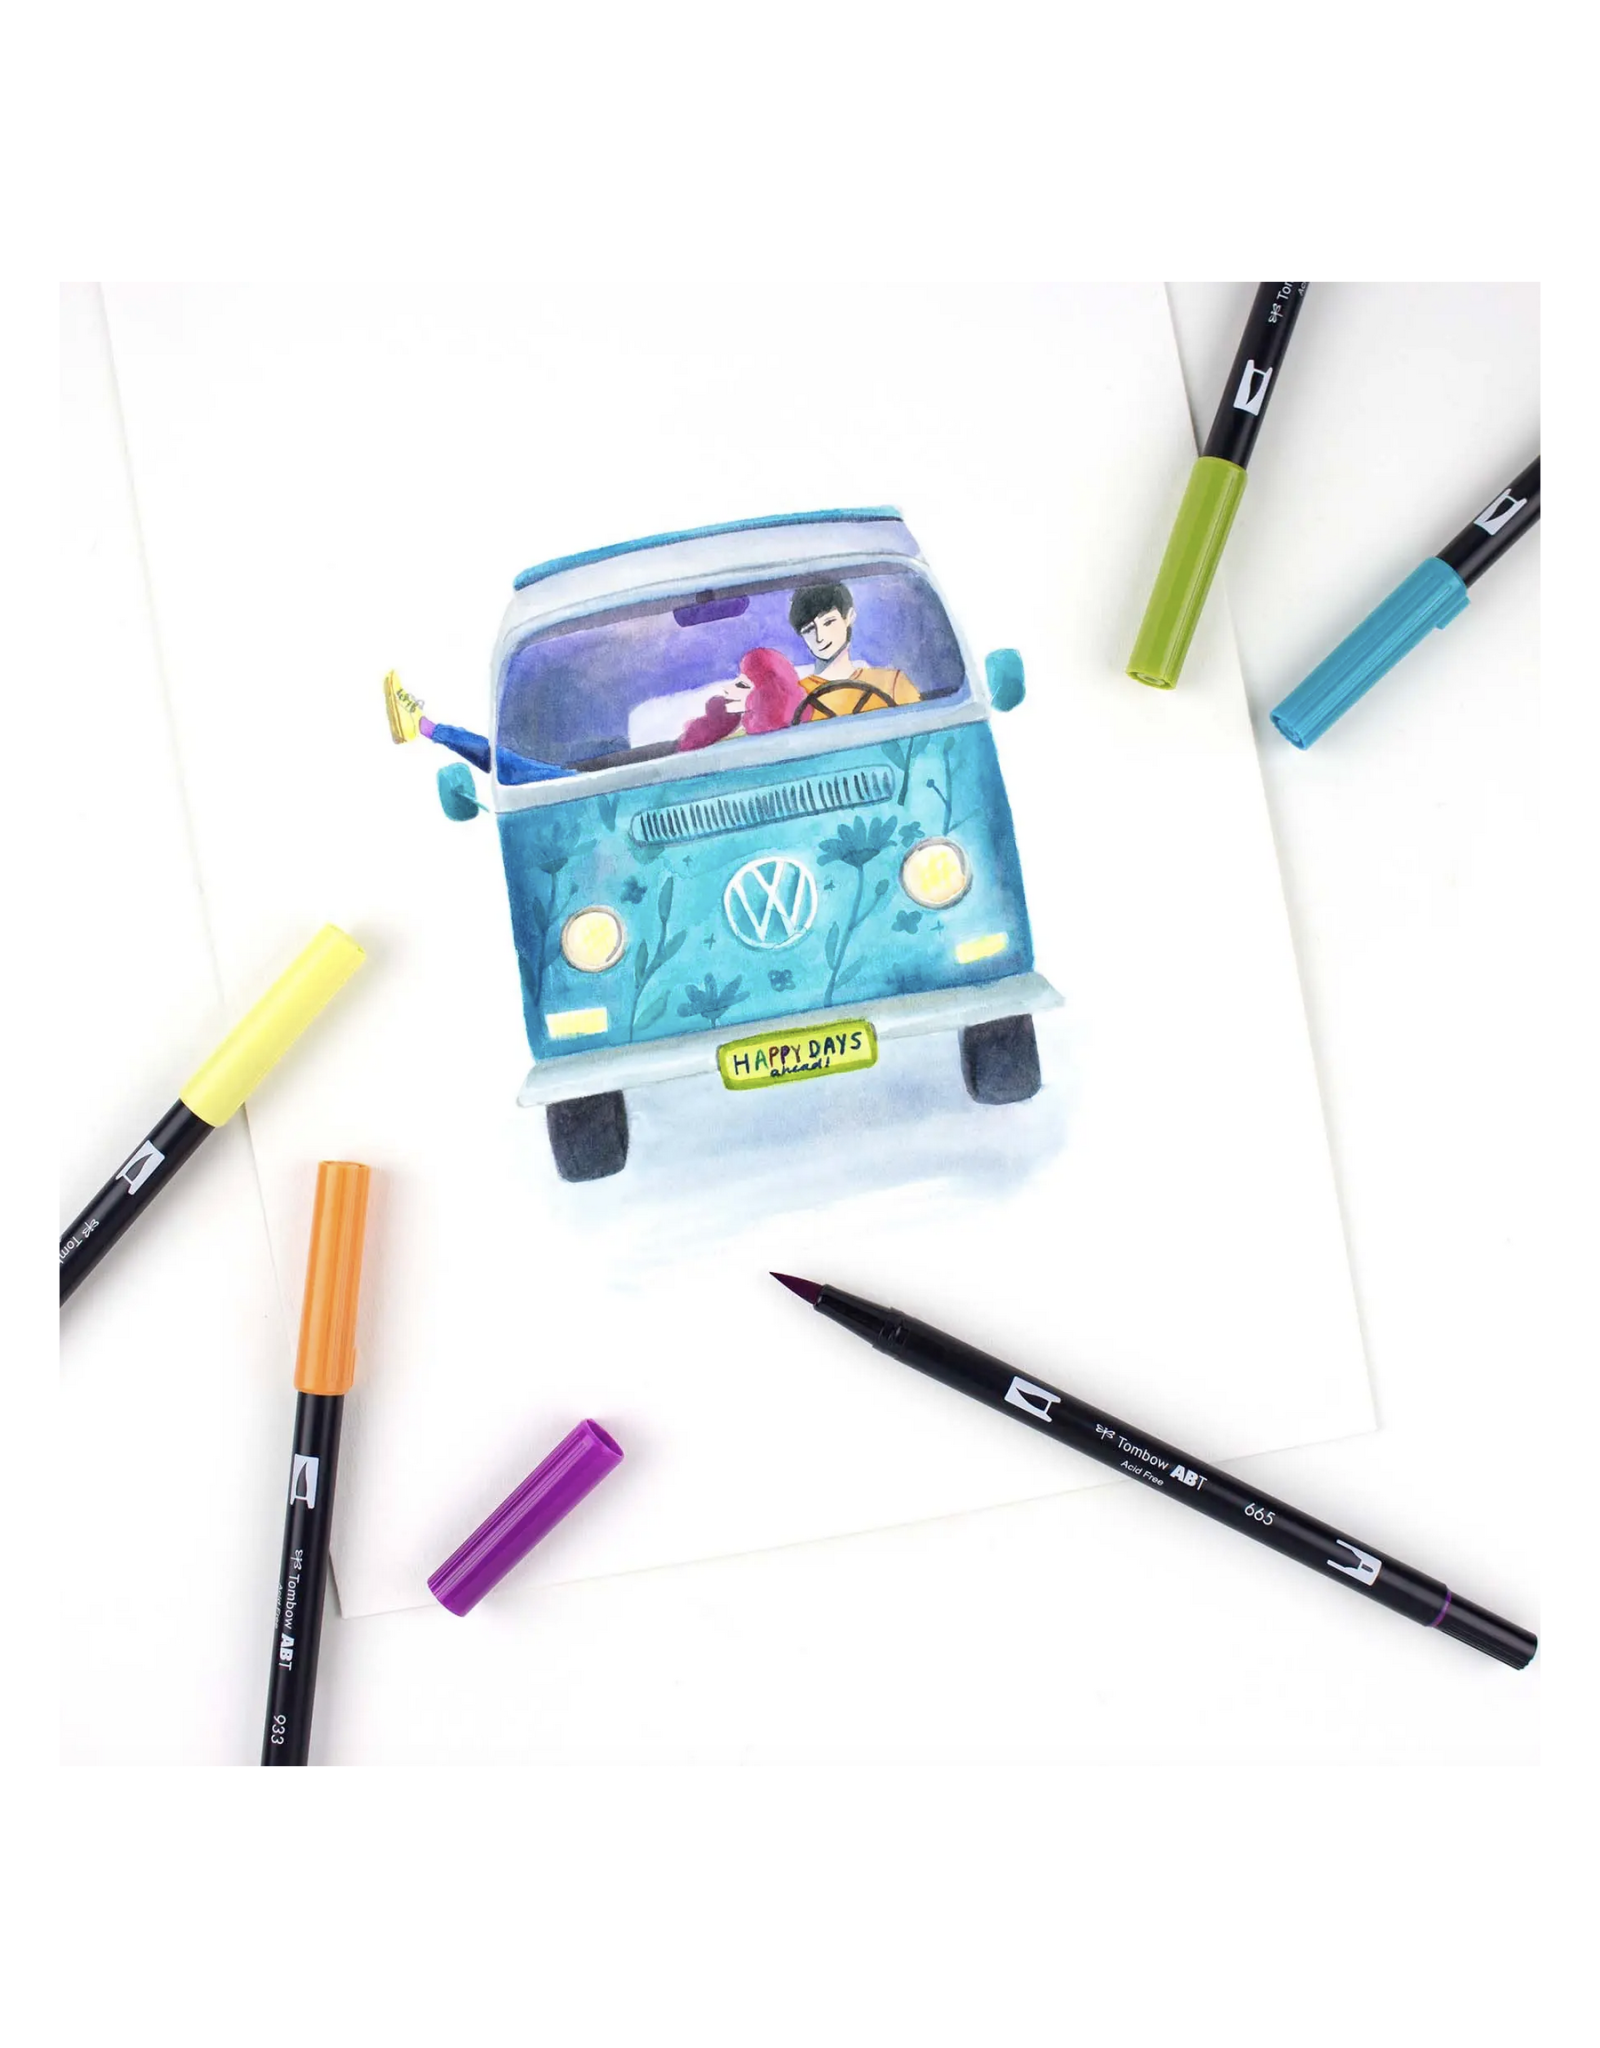 Dual Brush Pen Art Markers: Retro